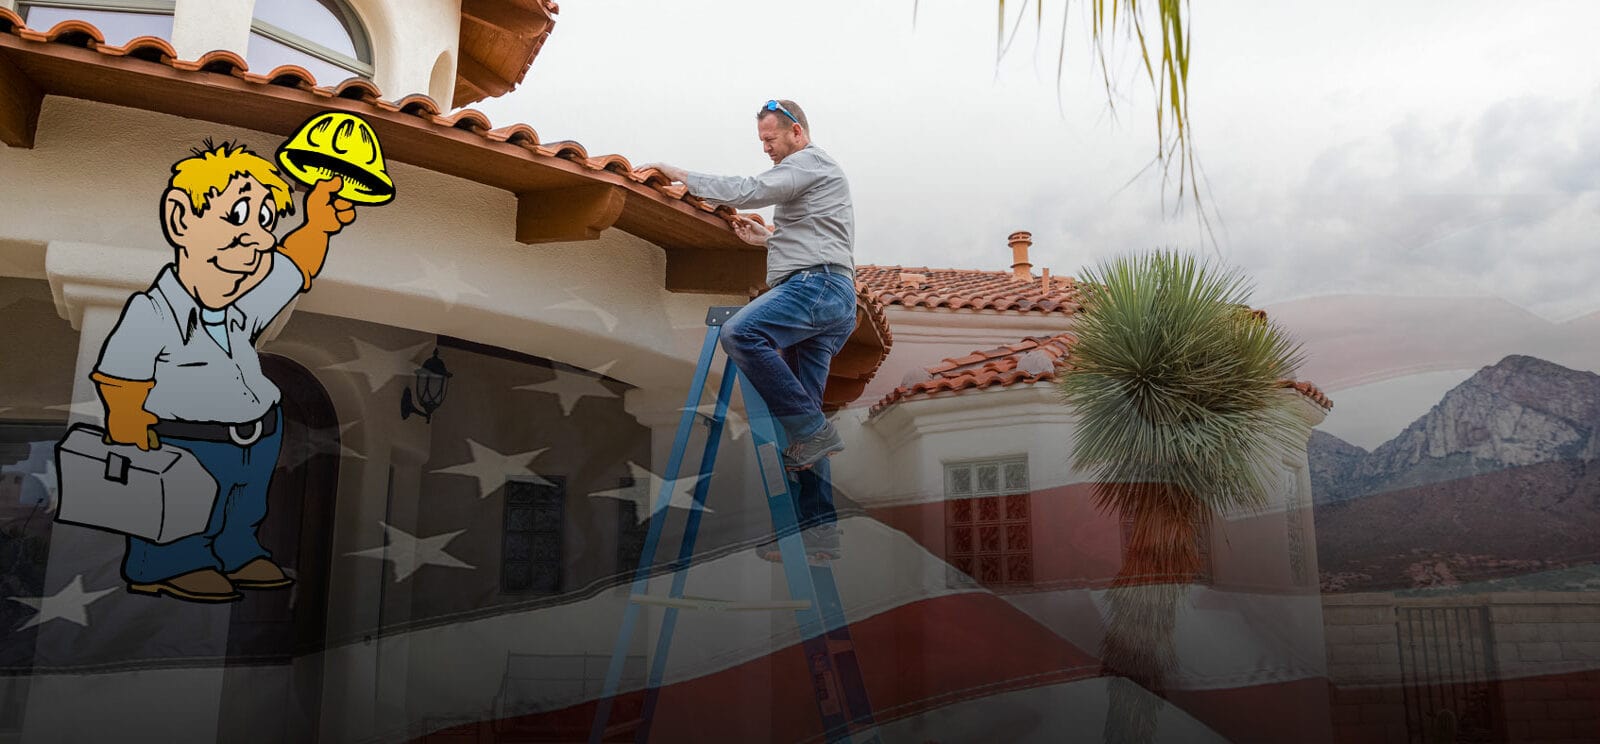 Handyman Services In Tucson Az Home Repair And Improvement